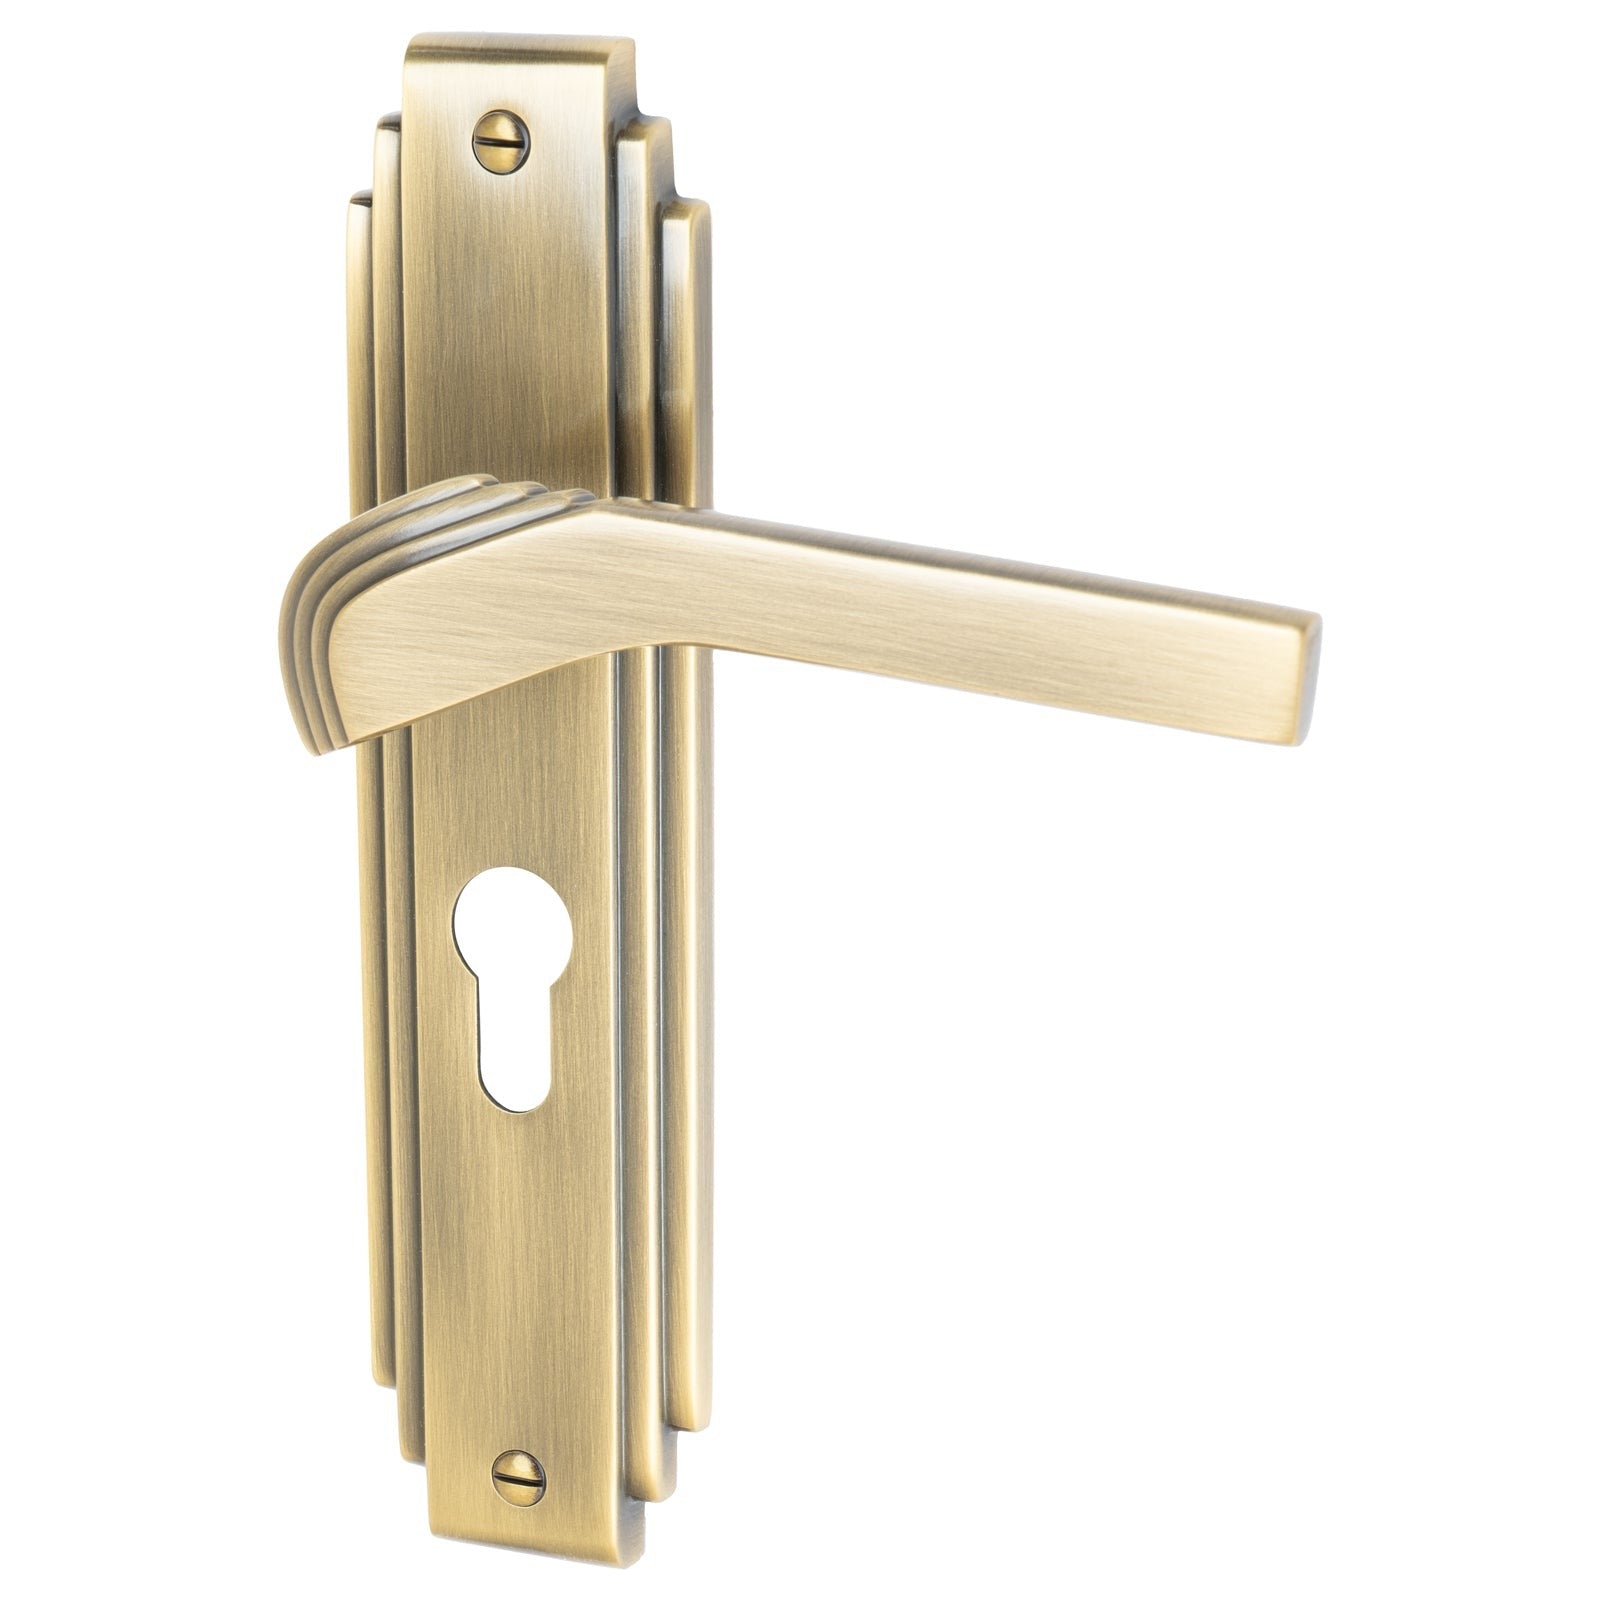 Tiffany Door Handles On Plate Euro Lock Handle in Aged Brass 